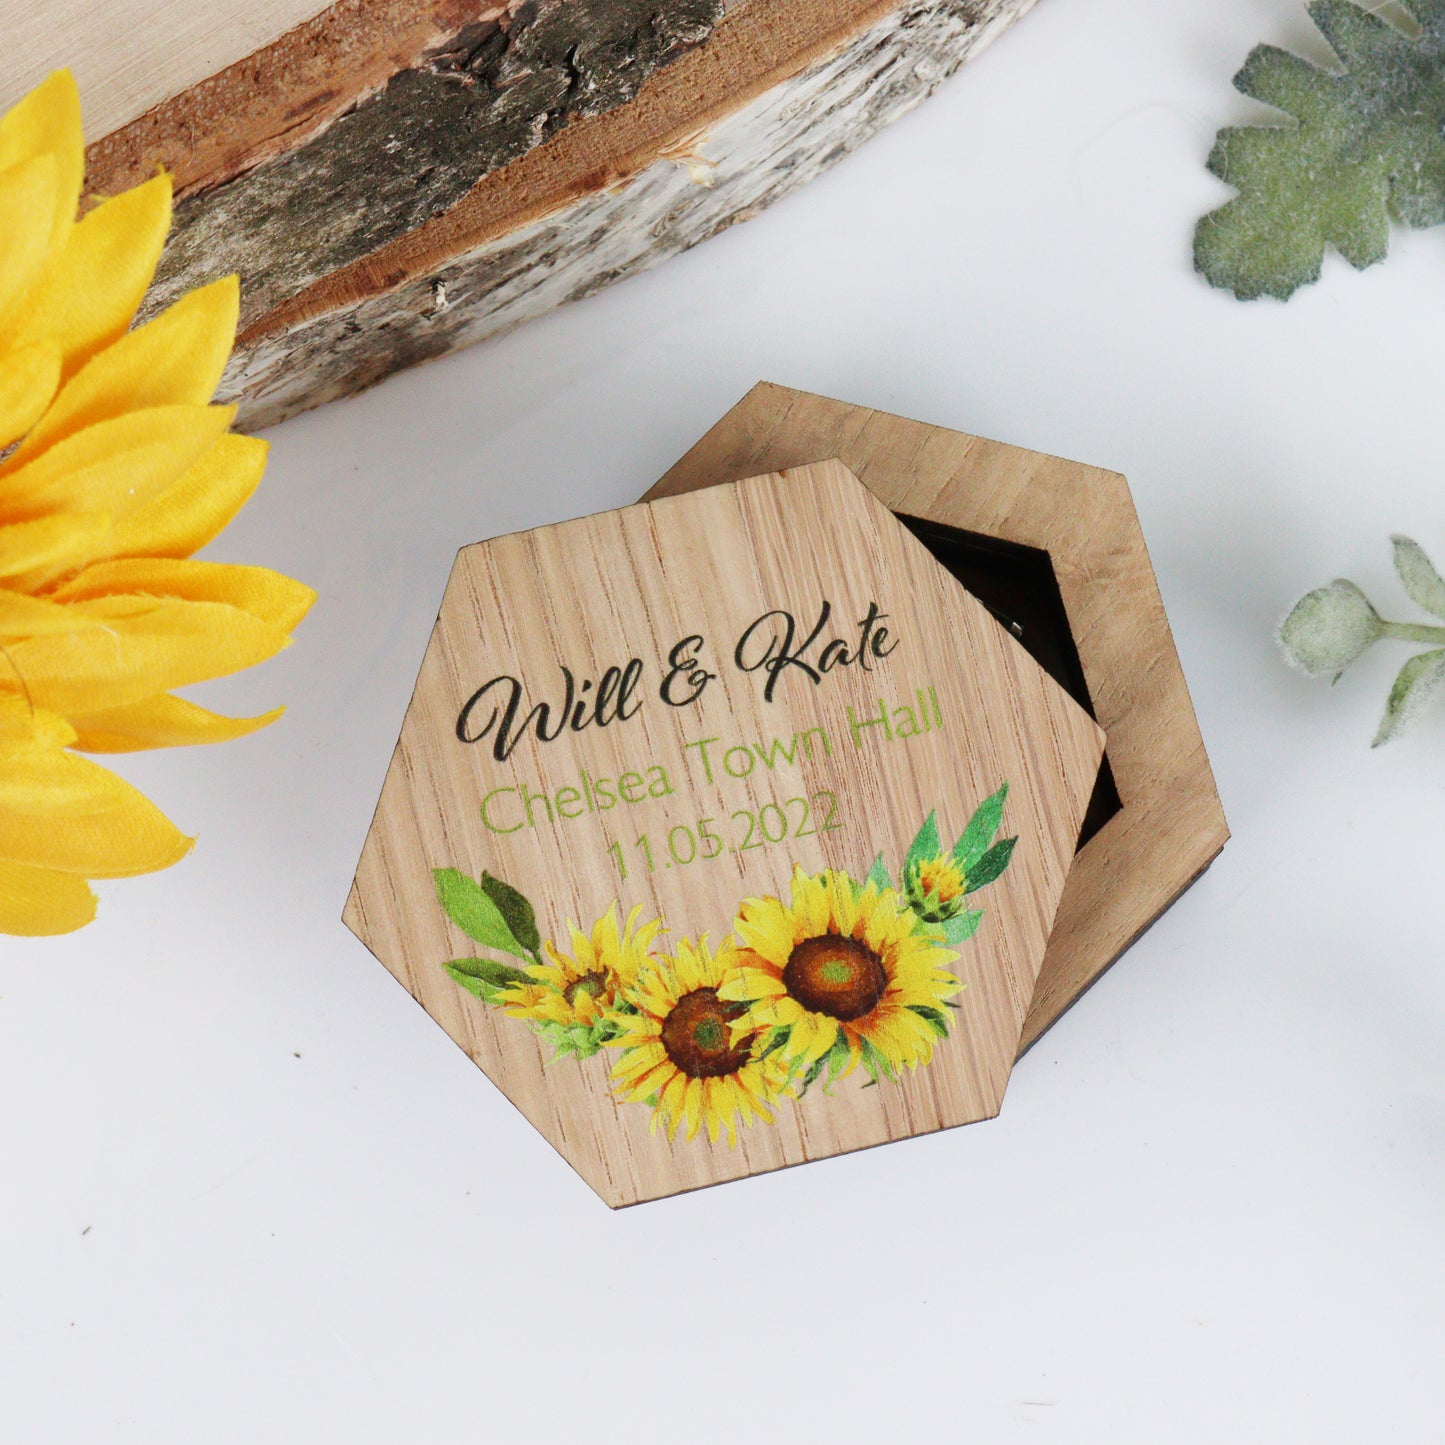 Personalised Wooden Wedding Ring Box Sunflower